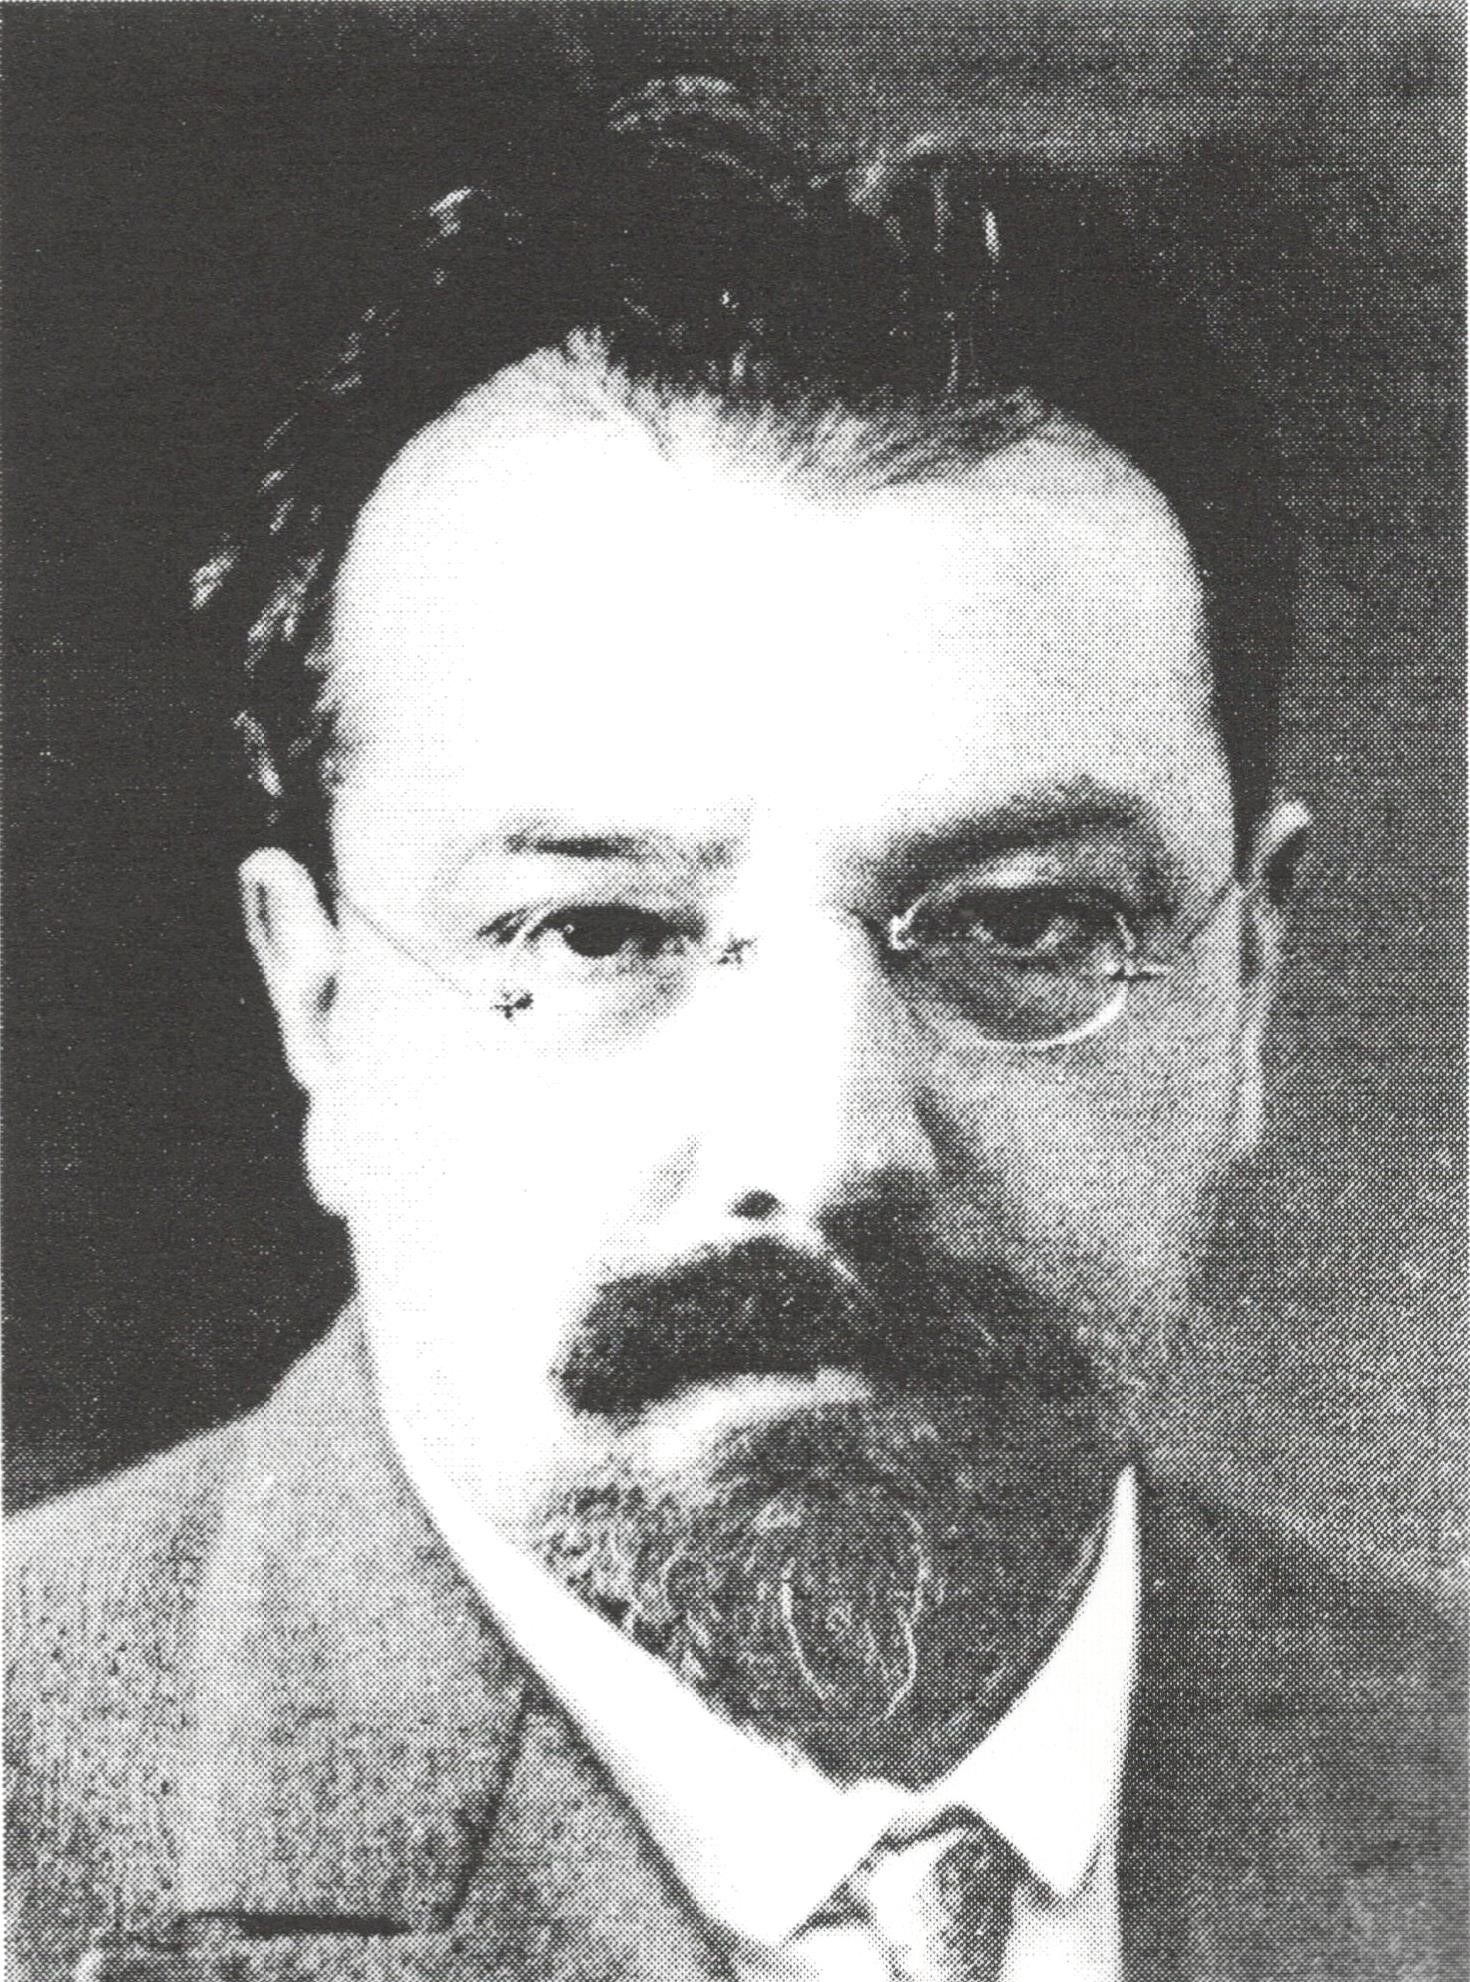 Dr. med. Adolf Edelmann, <br> image source Der Wiener Tag, no. 29, 27 July 1931, Austrian National Library  - Image Archive
